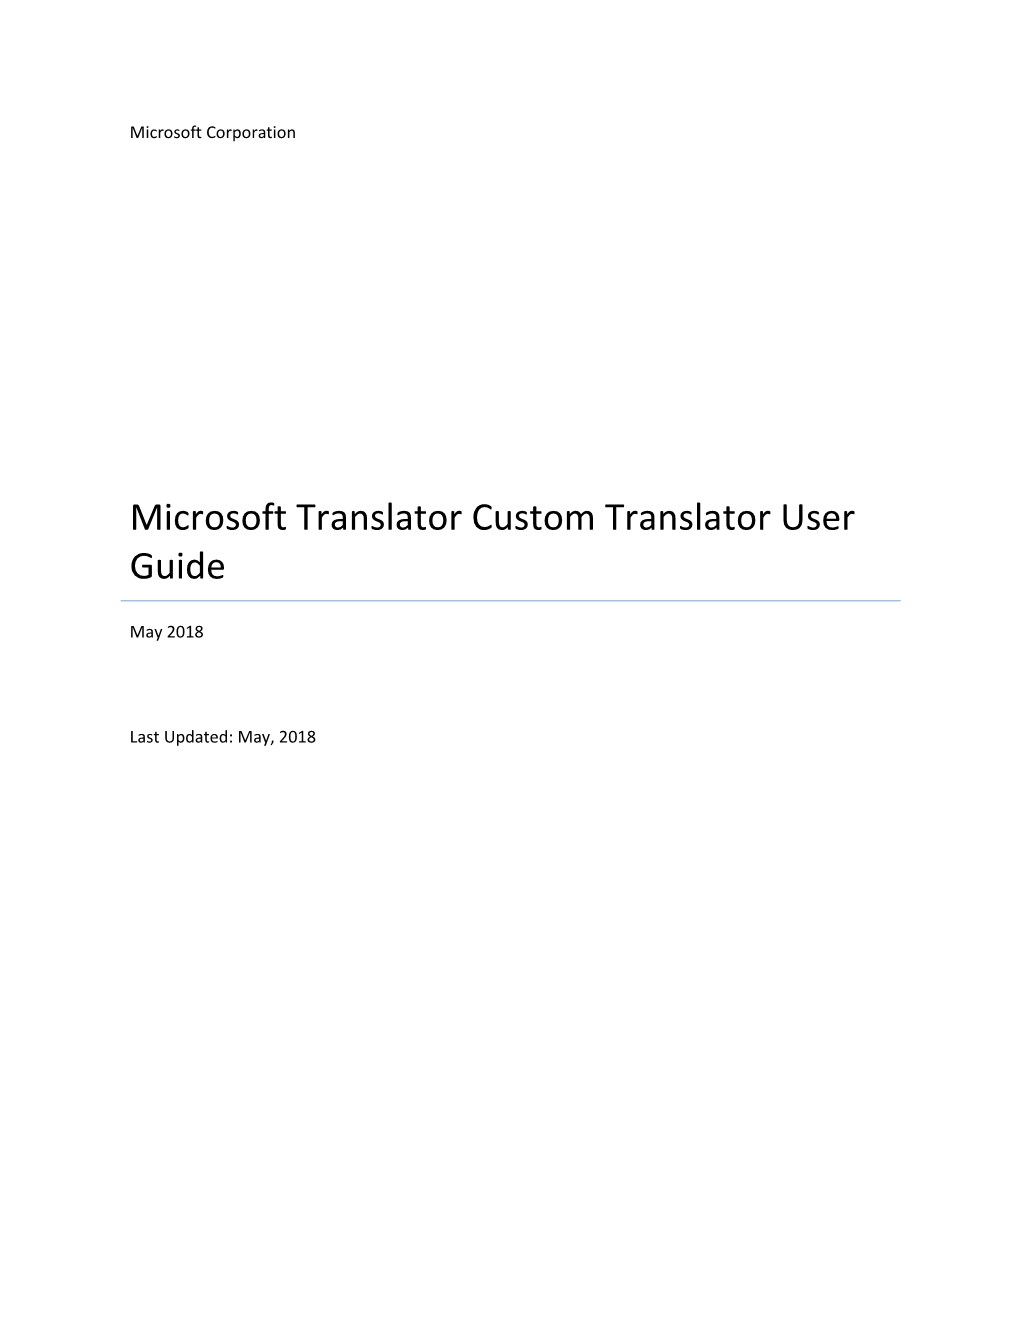 Microsoft Translator Custom Translator User Guide